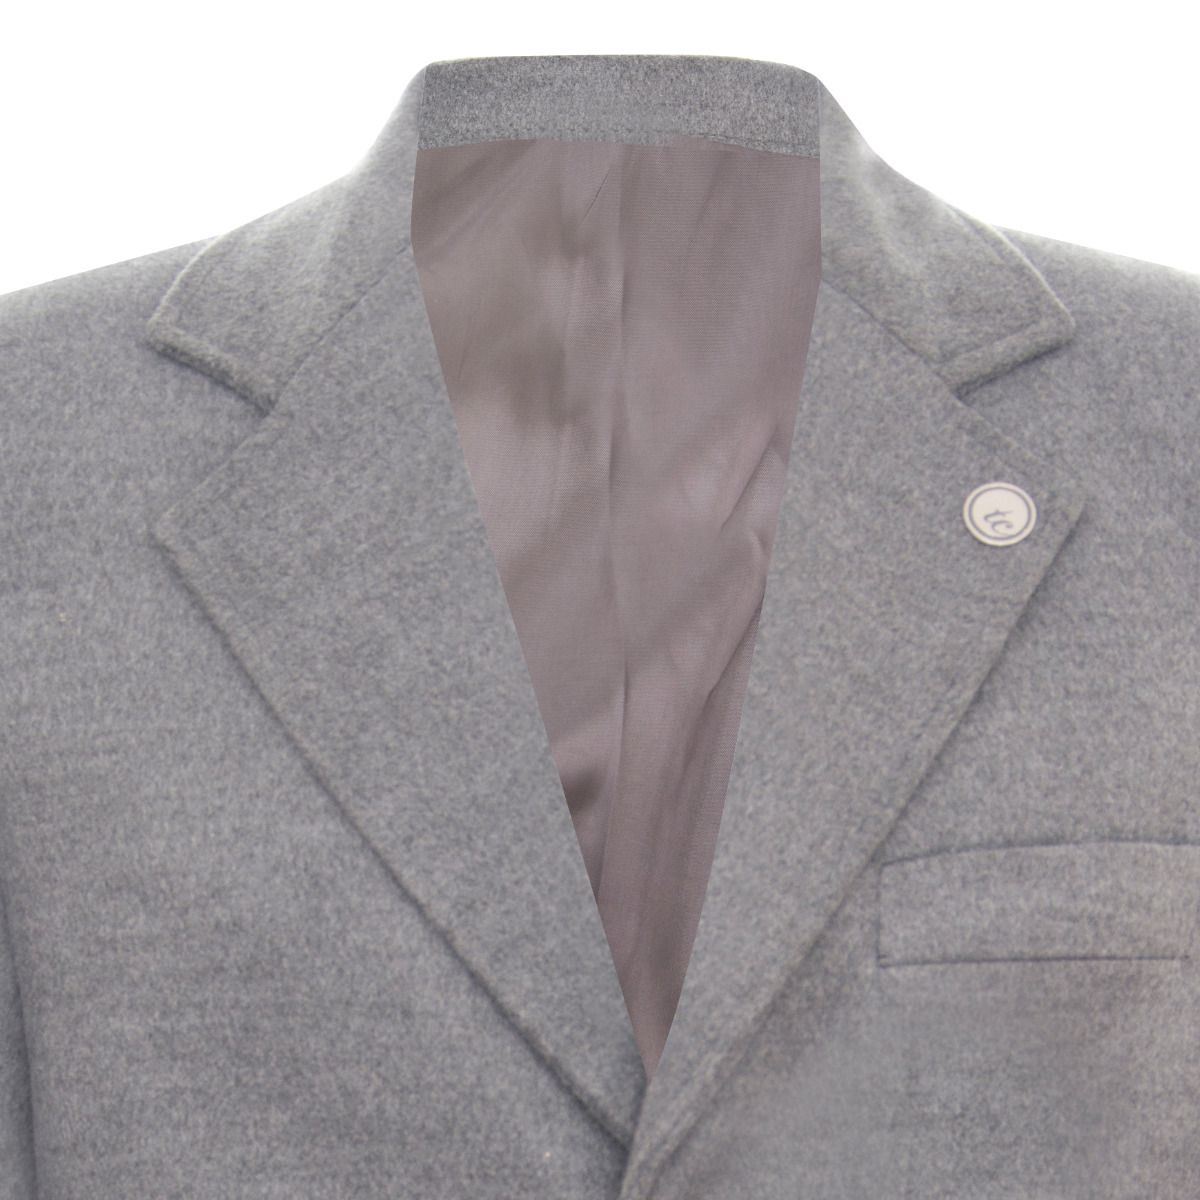 Men's Long Grey Wool Slim Fit Overcoat